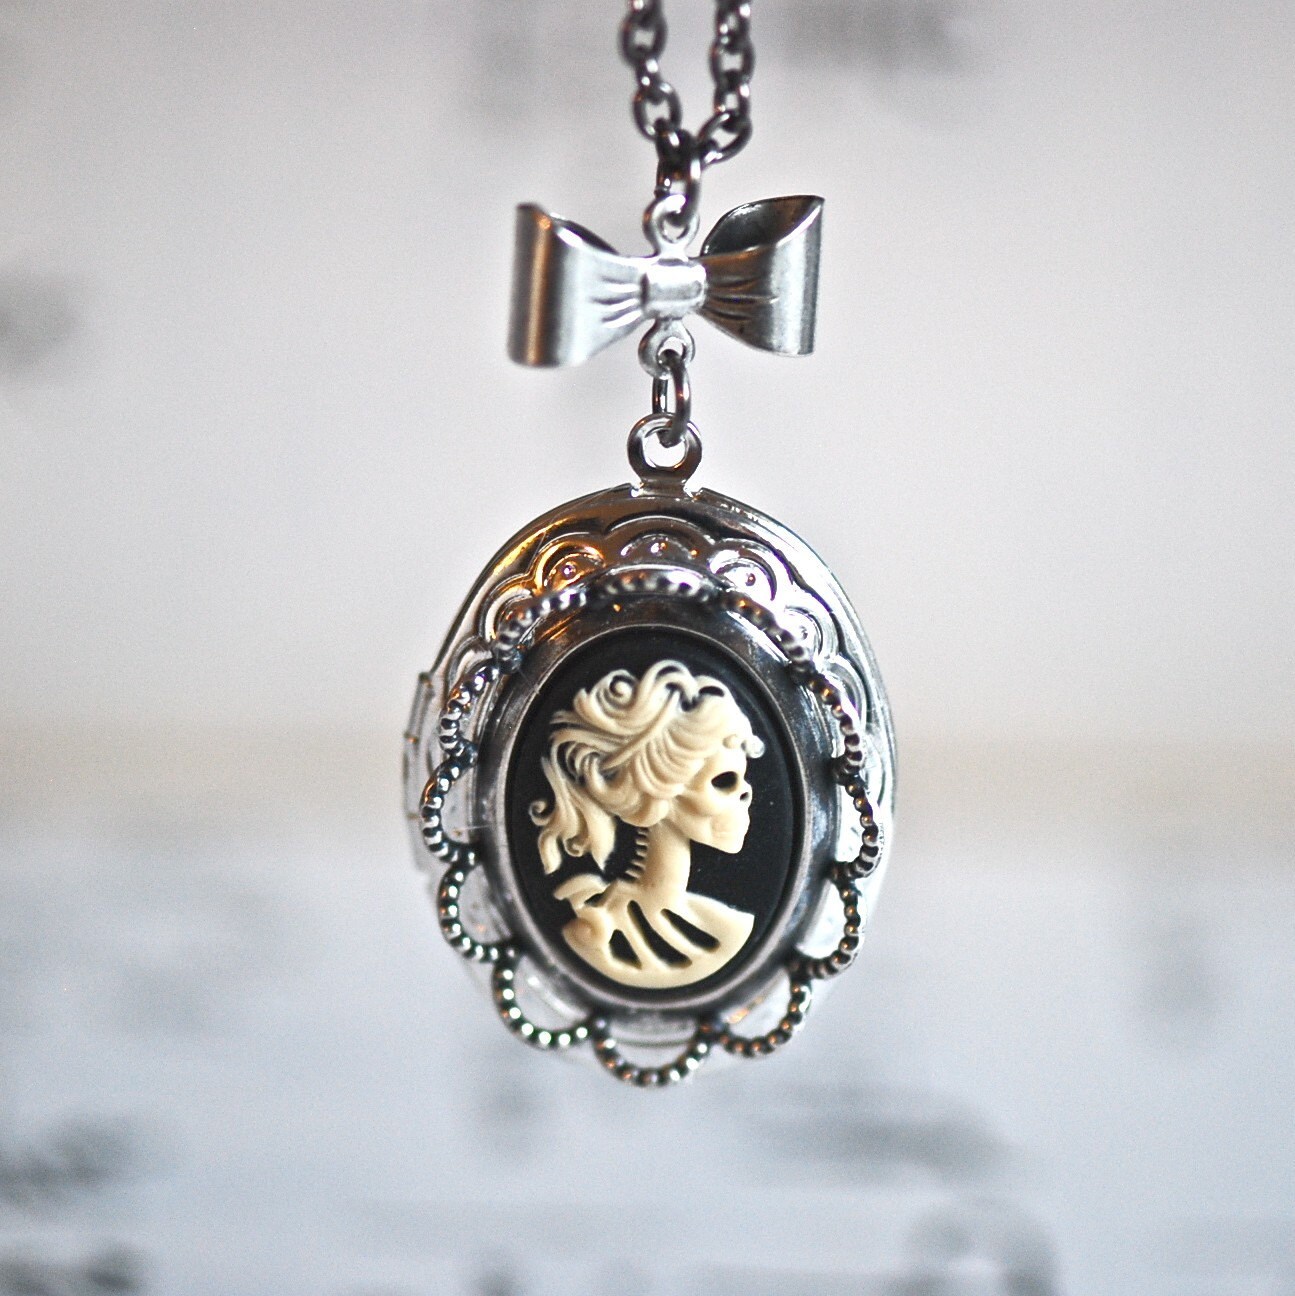 SALE - Miss Skeleton locket with bow tie necklace - Ivory Black Lolita Zombie Girl Cameo - SILVER LOCKET - gunmetal chain